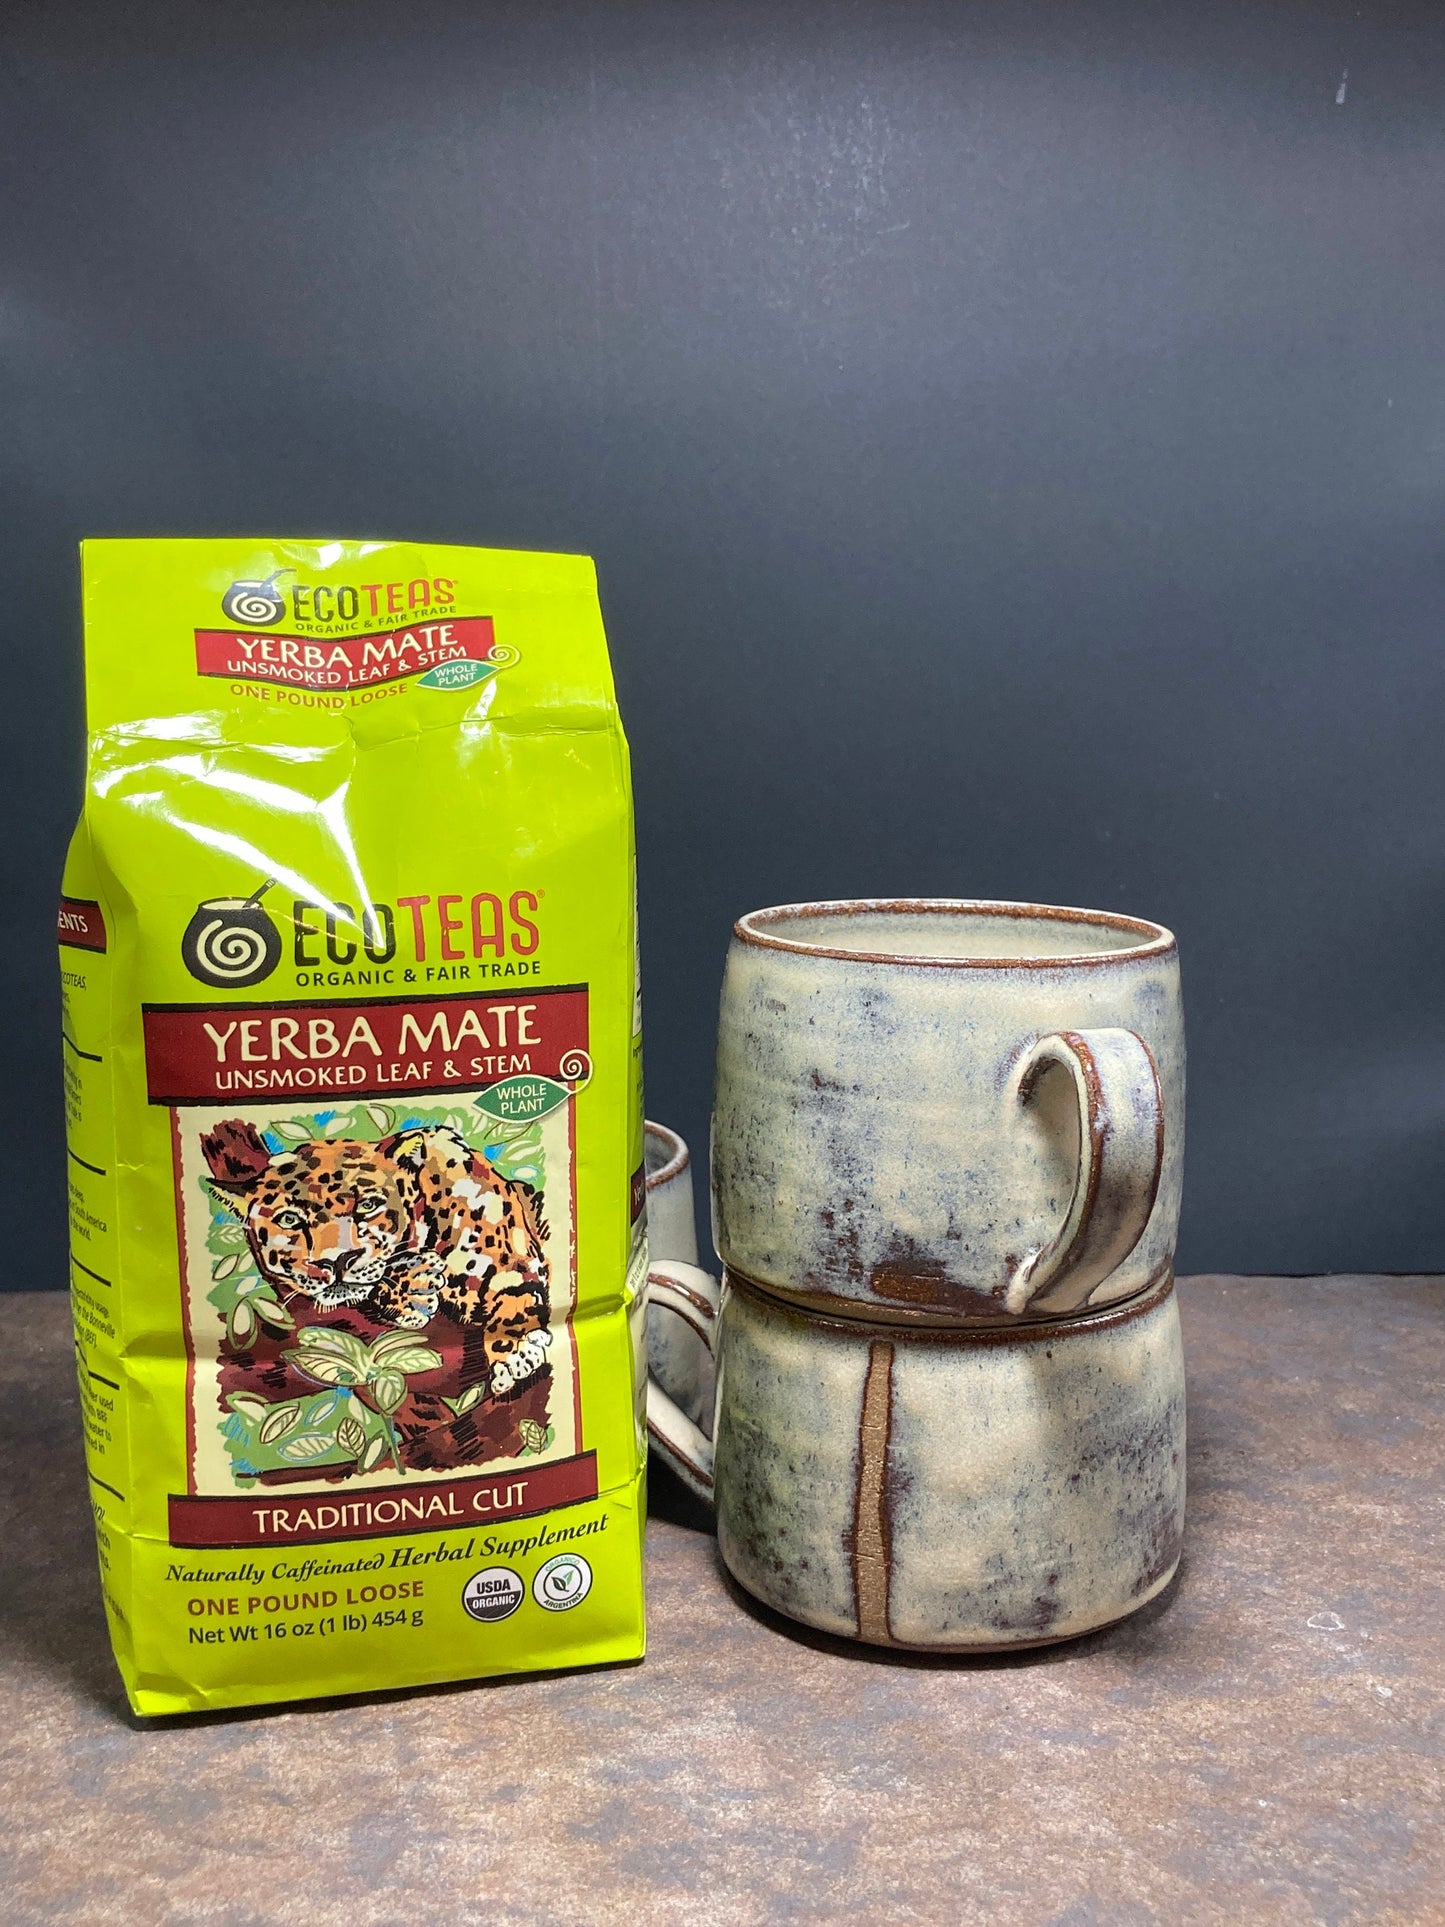 Ceramic Coffee Mug | Natural  Finish Pottery | Great House warming Gift, Wedding gift